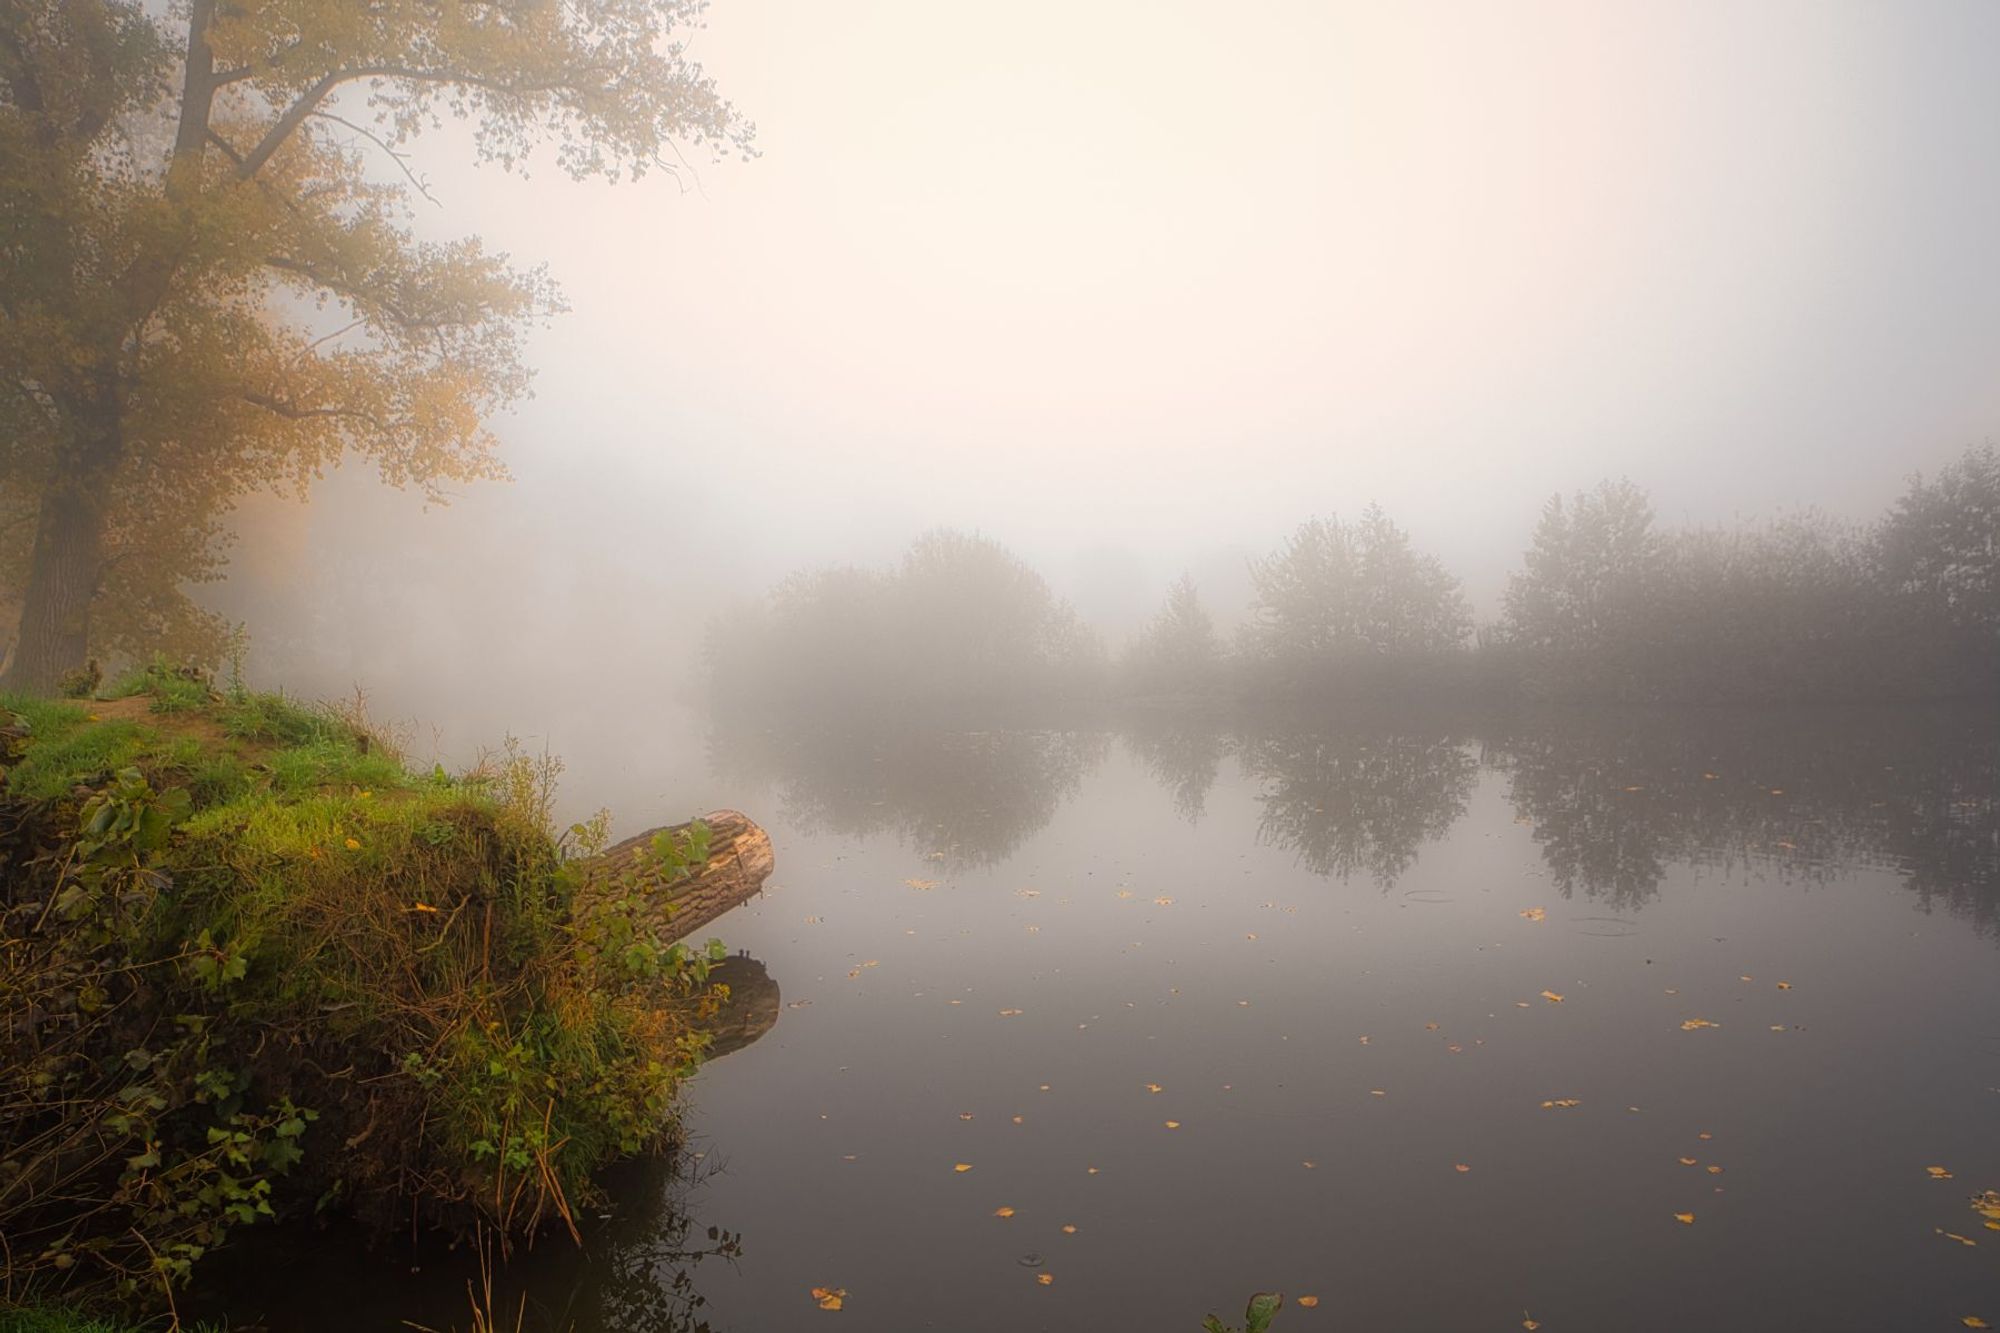 Misty morning photography by Brecht De Ruyte